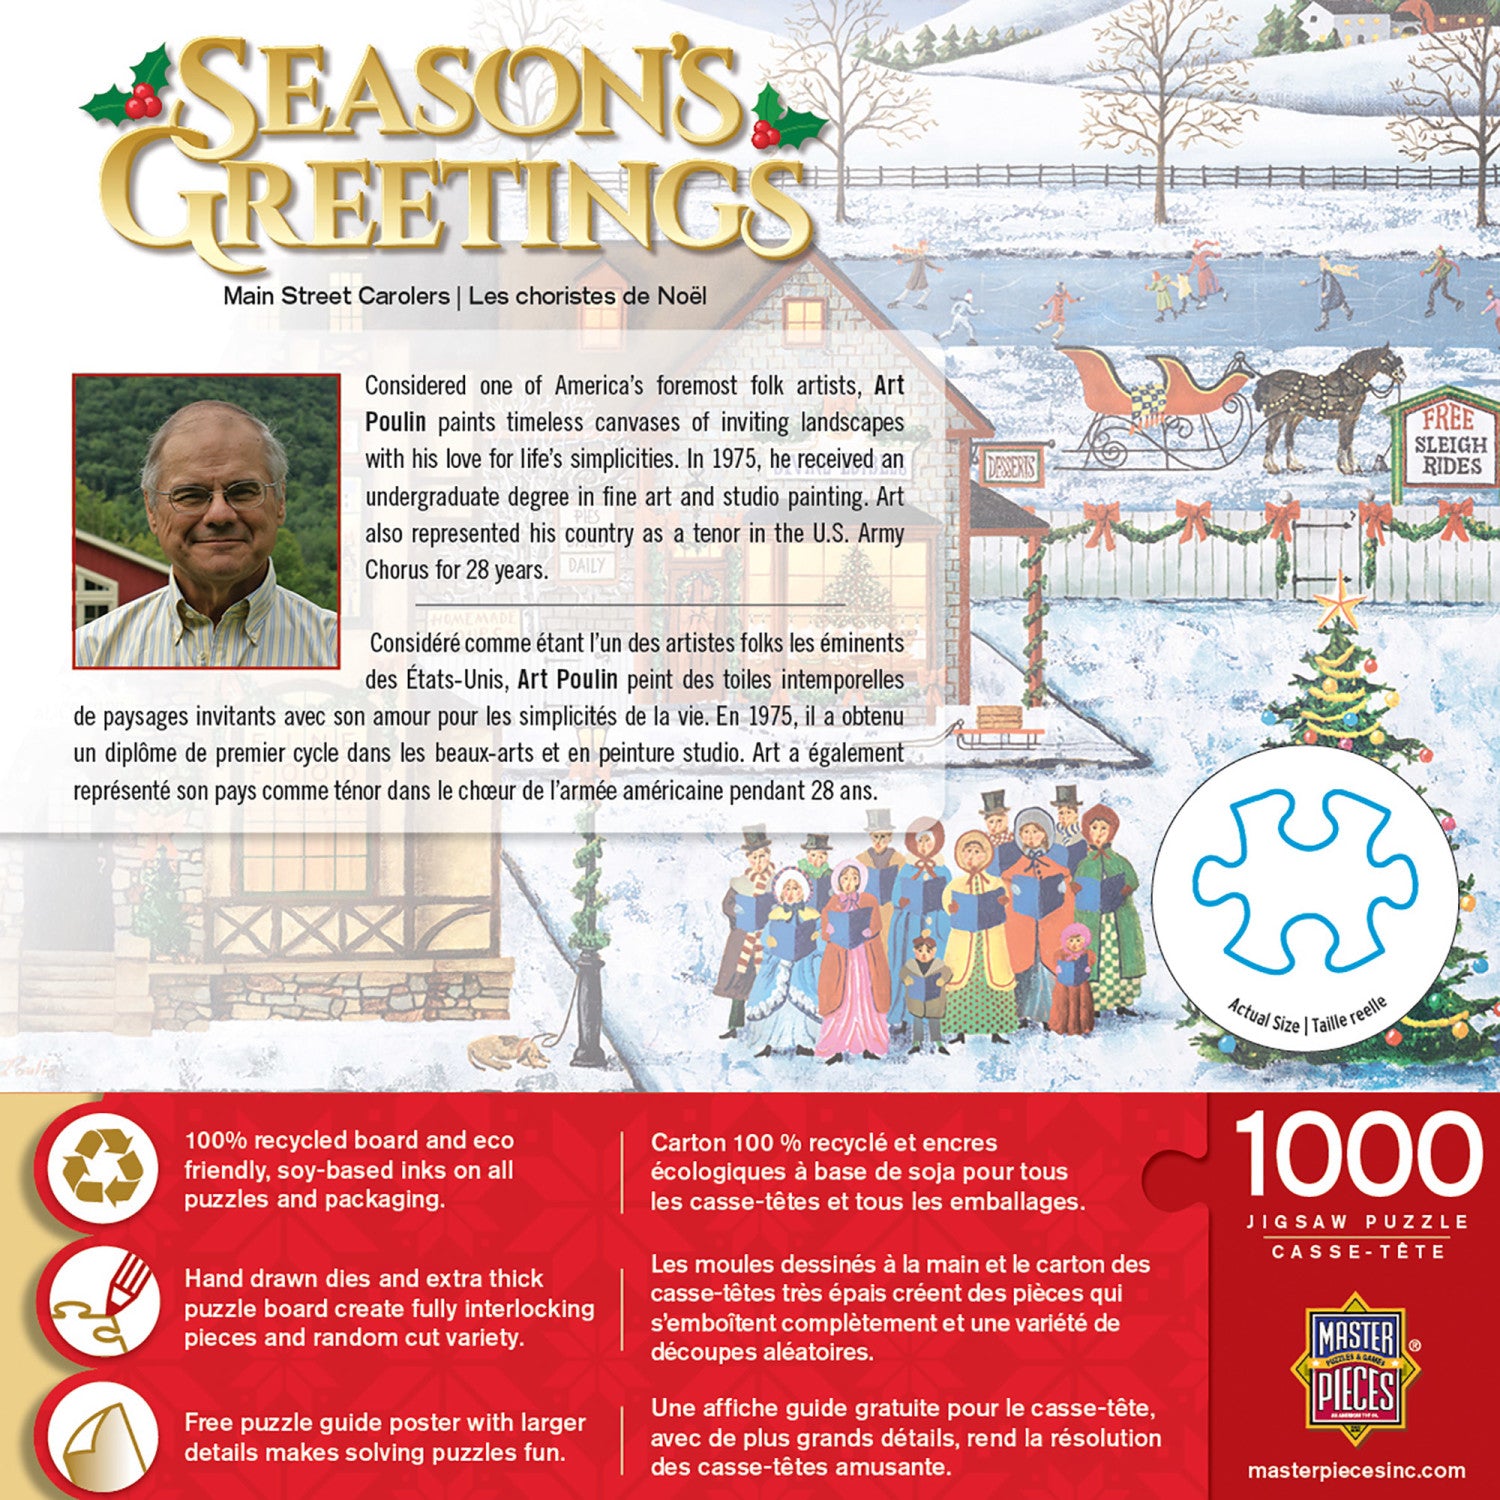 Season's Greetings - Main Street Carolers 1000 Piece Puzzle